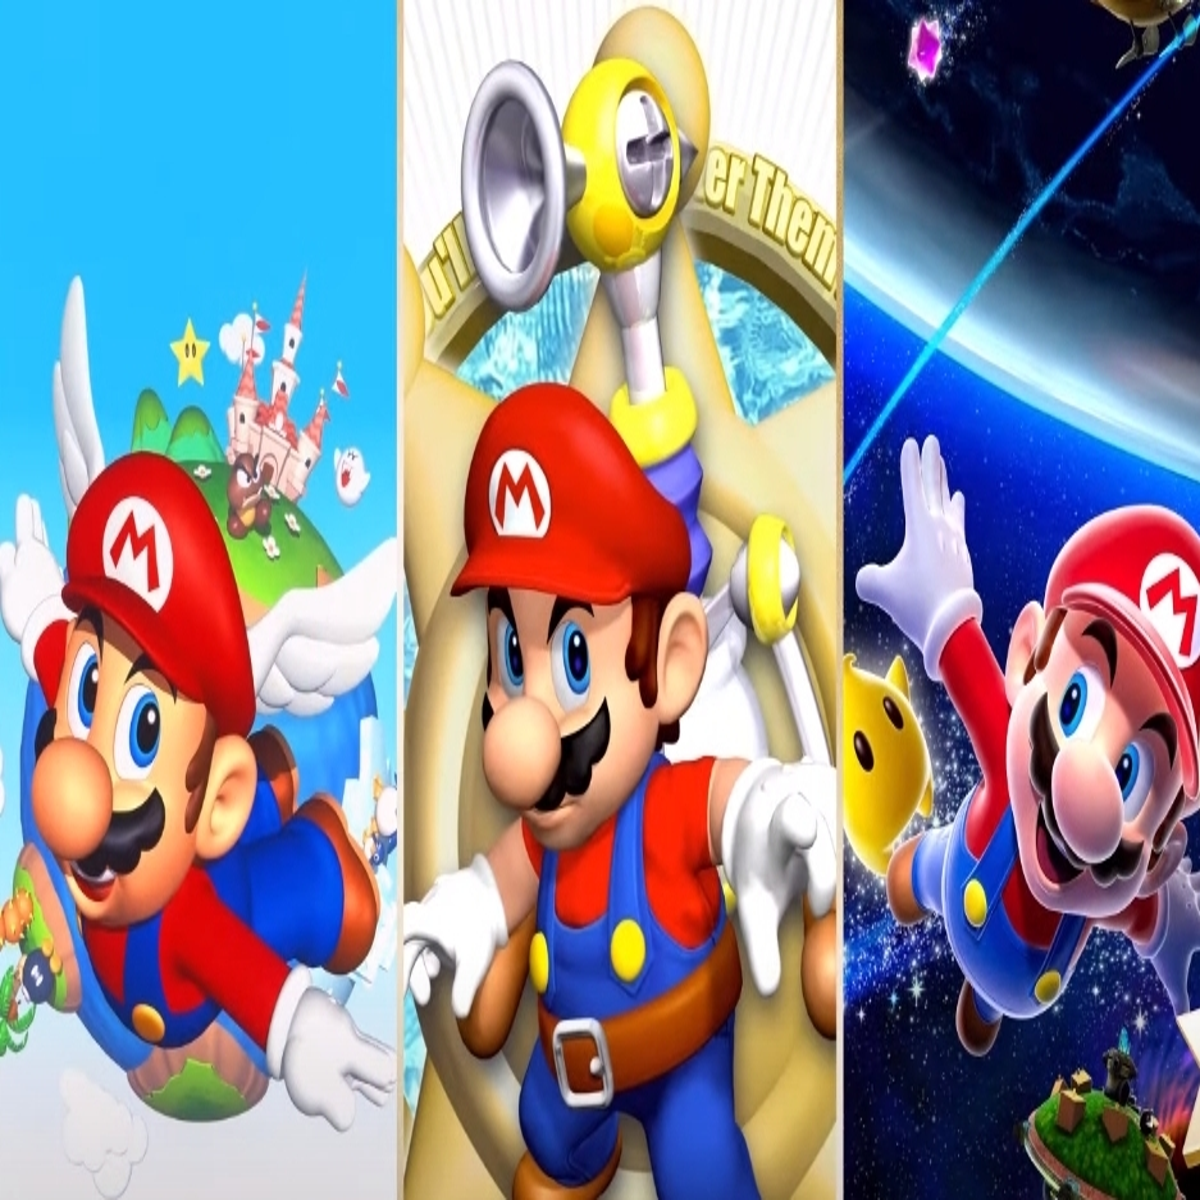 Super Mario 3D All-Stars aterriza el 18 de septiembre! (Nintendo Switch) 